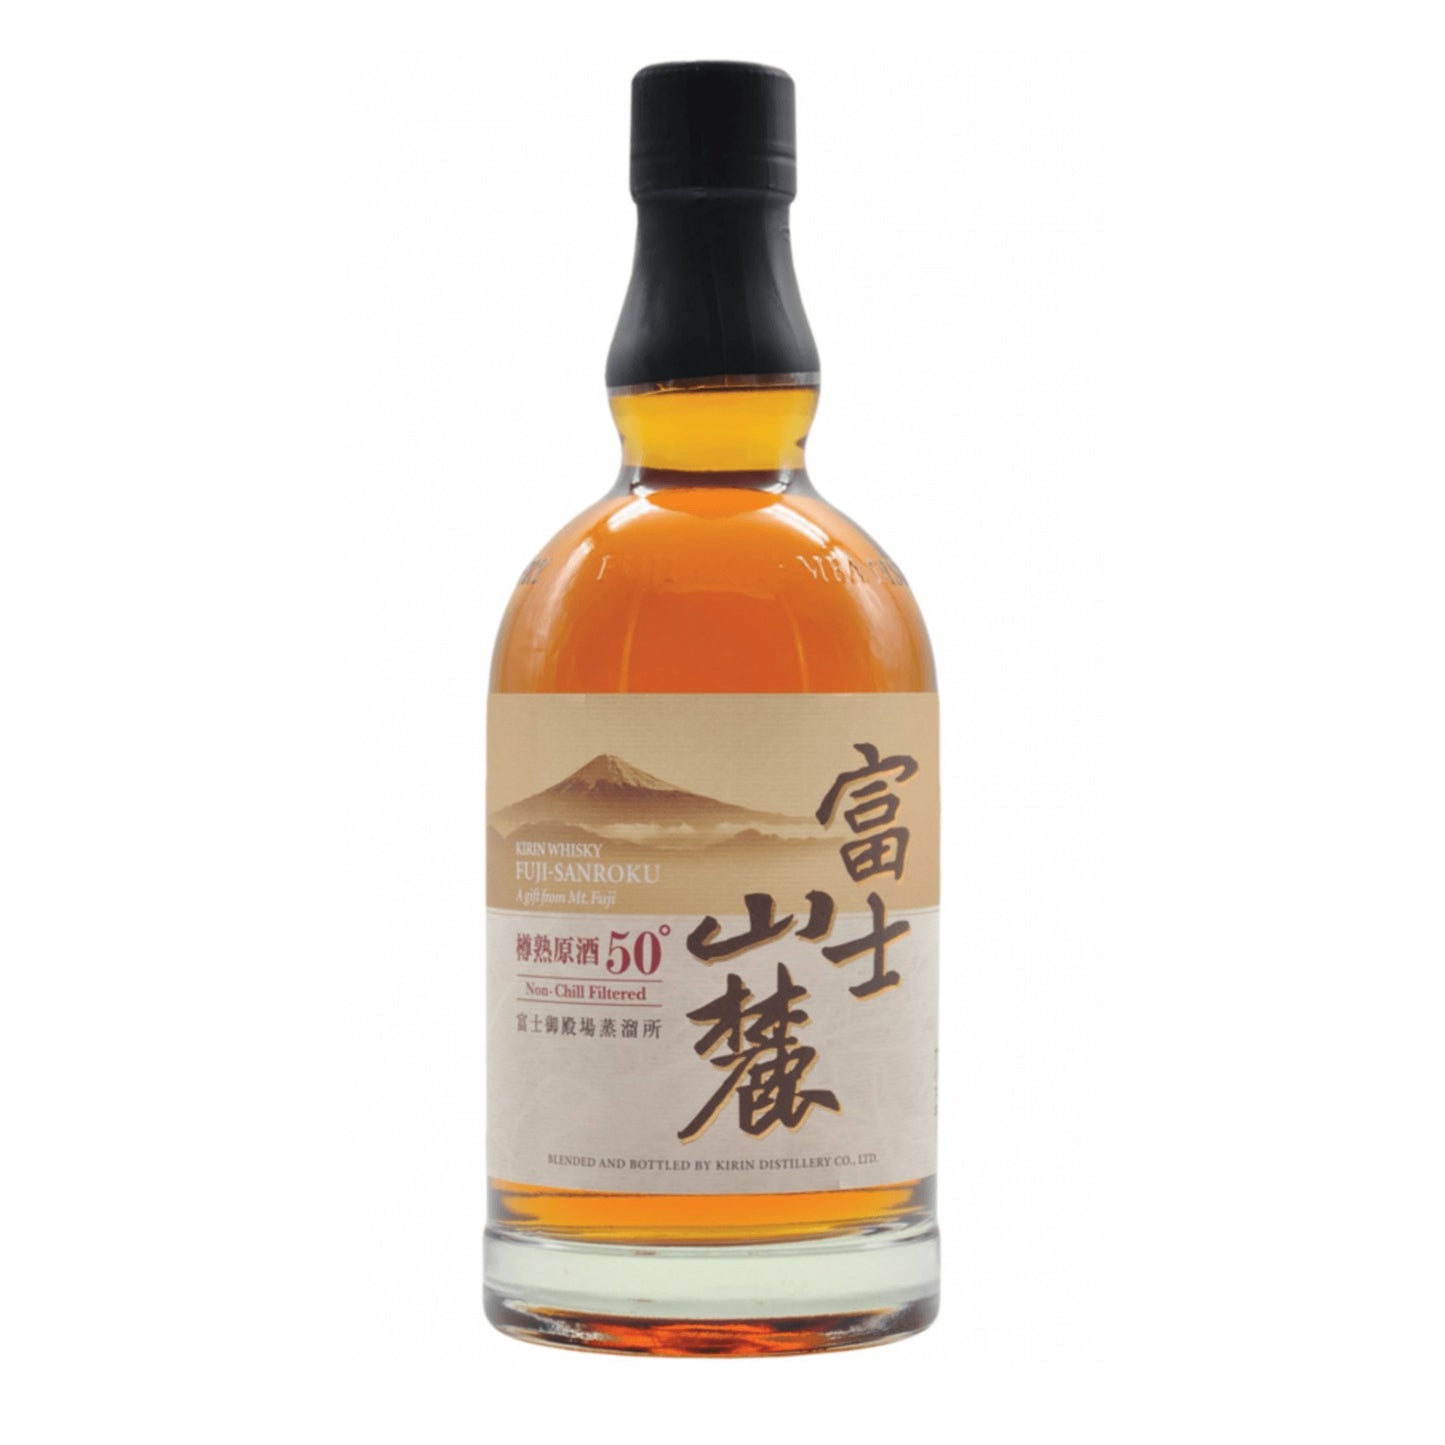 Kirin Fuji Sanroku Tarujuku Blend Japanese Whisky 700ml - Booze House